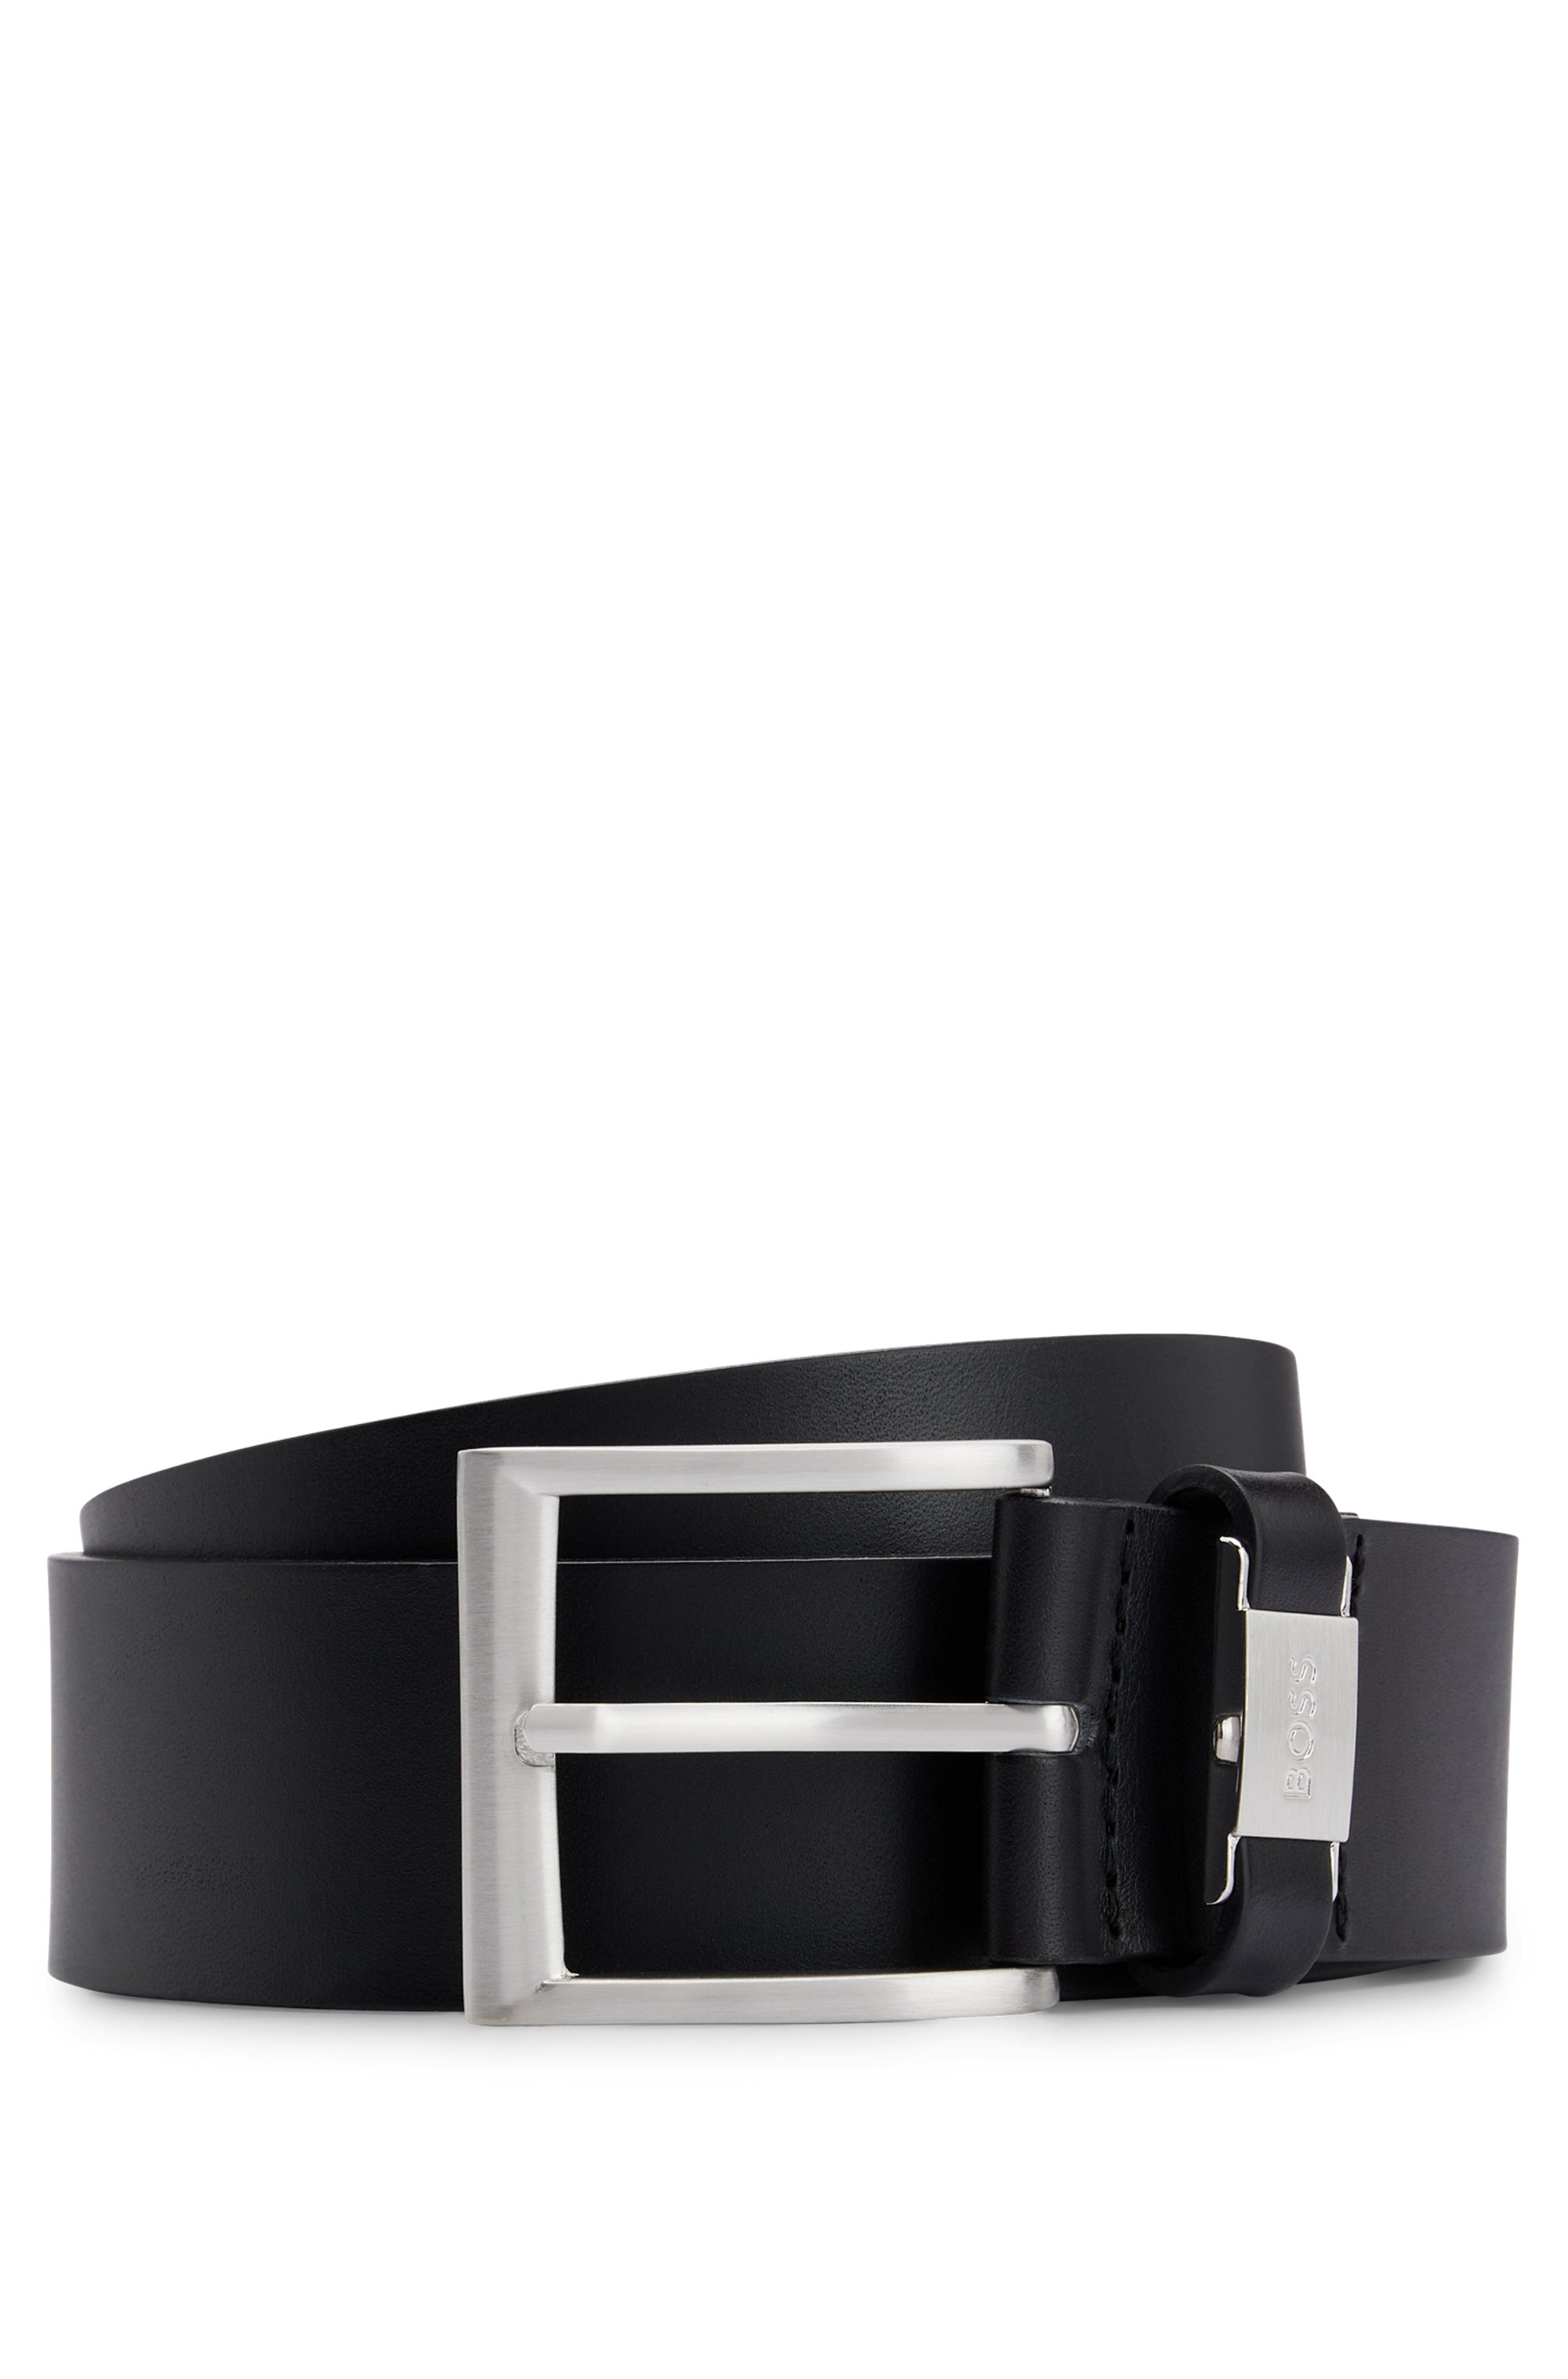 Italian-leather belt with branded metal trim, Black